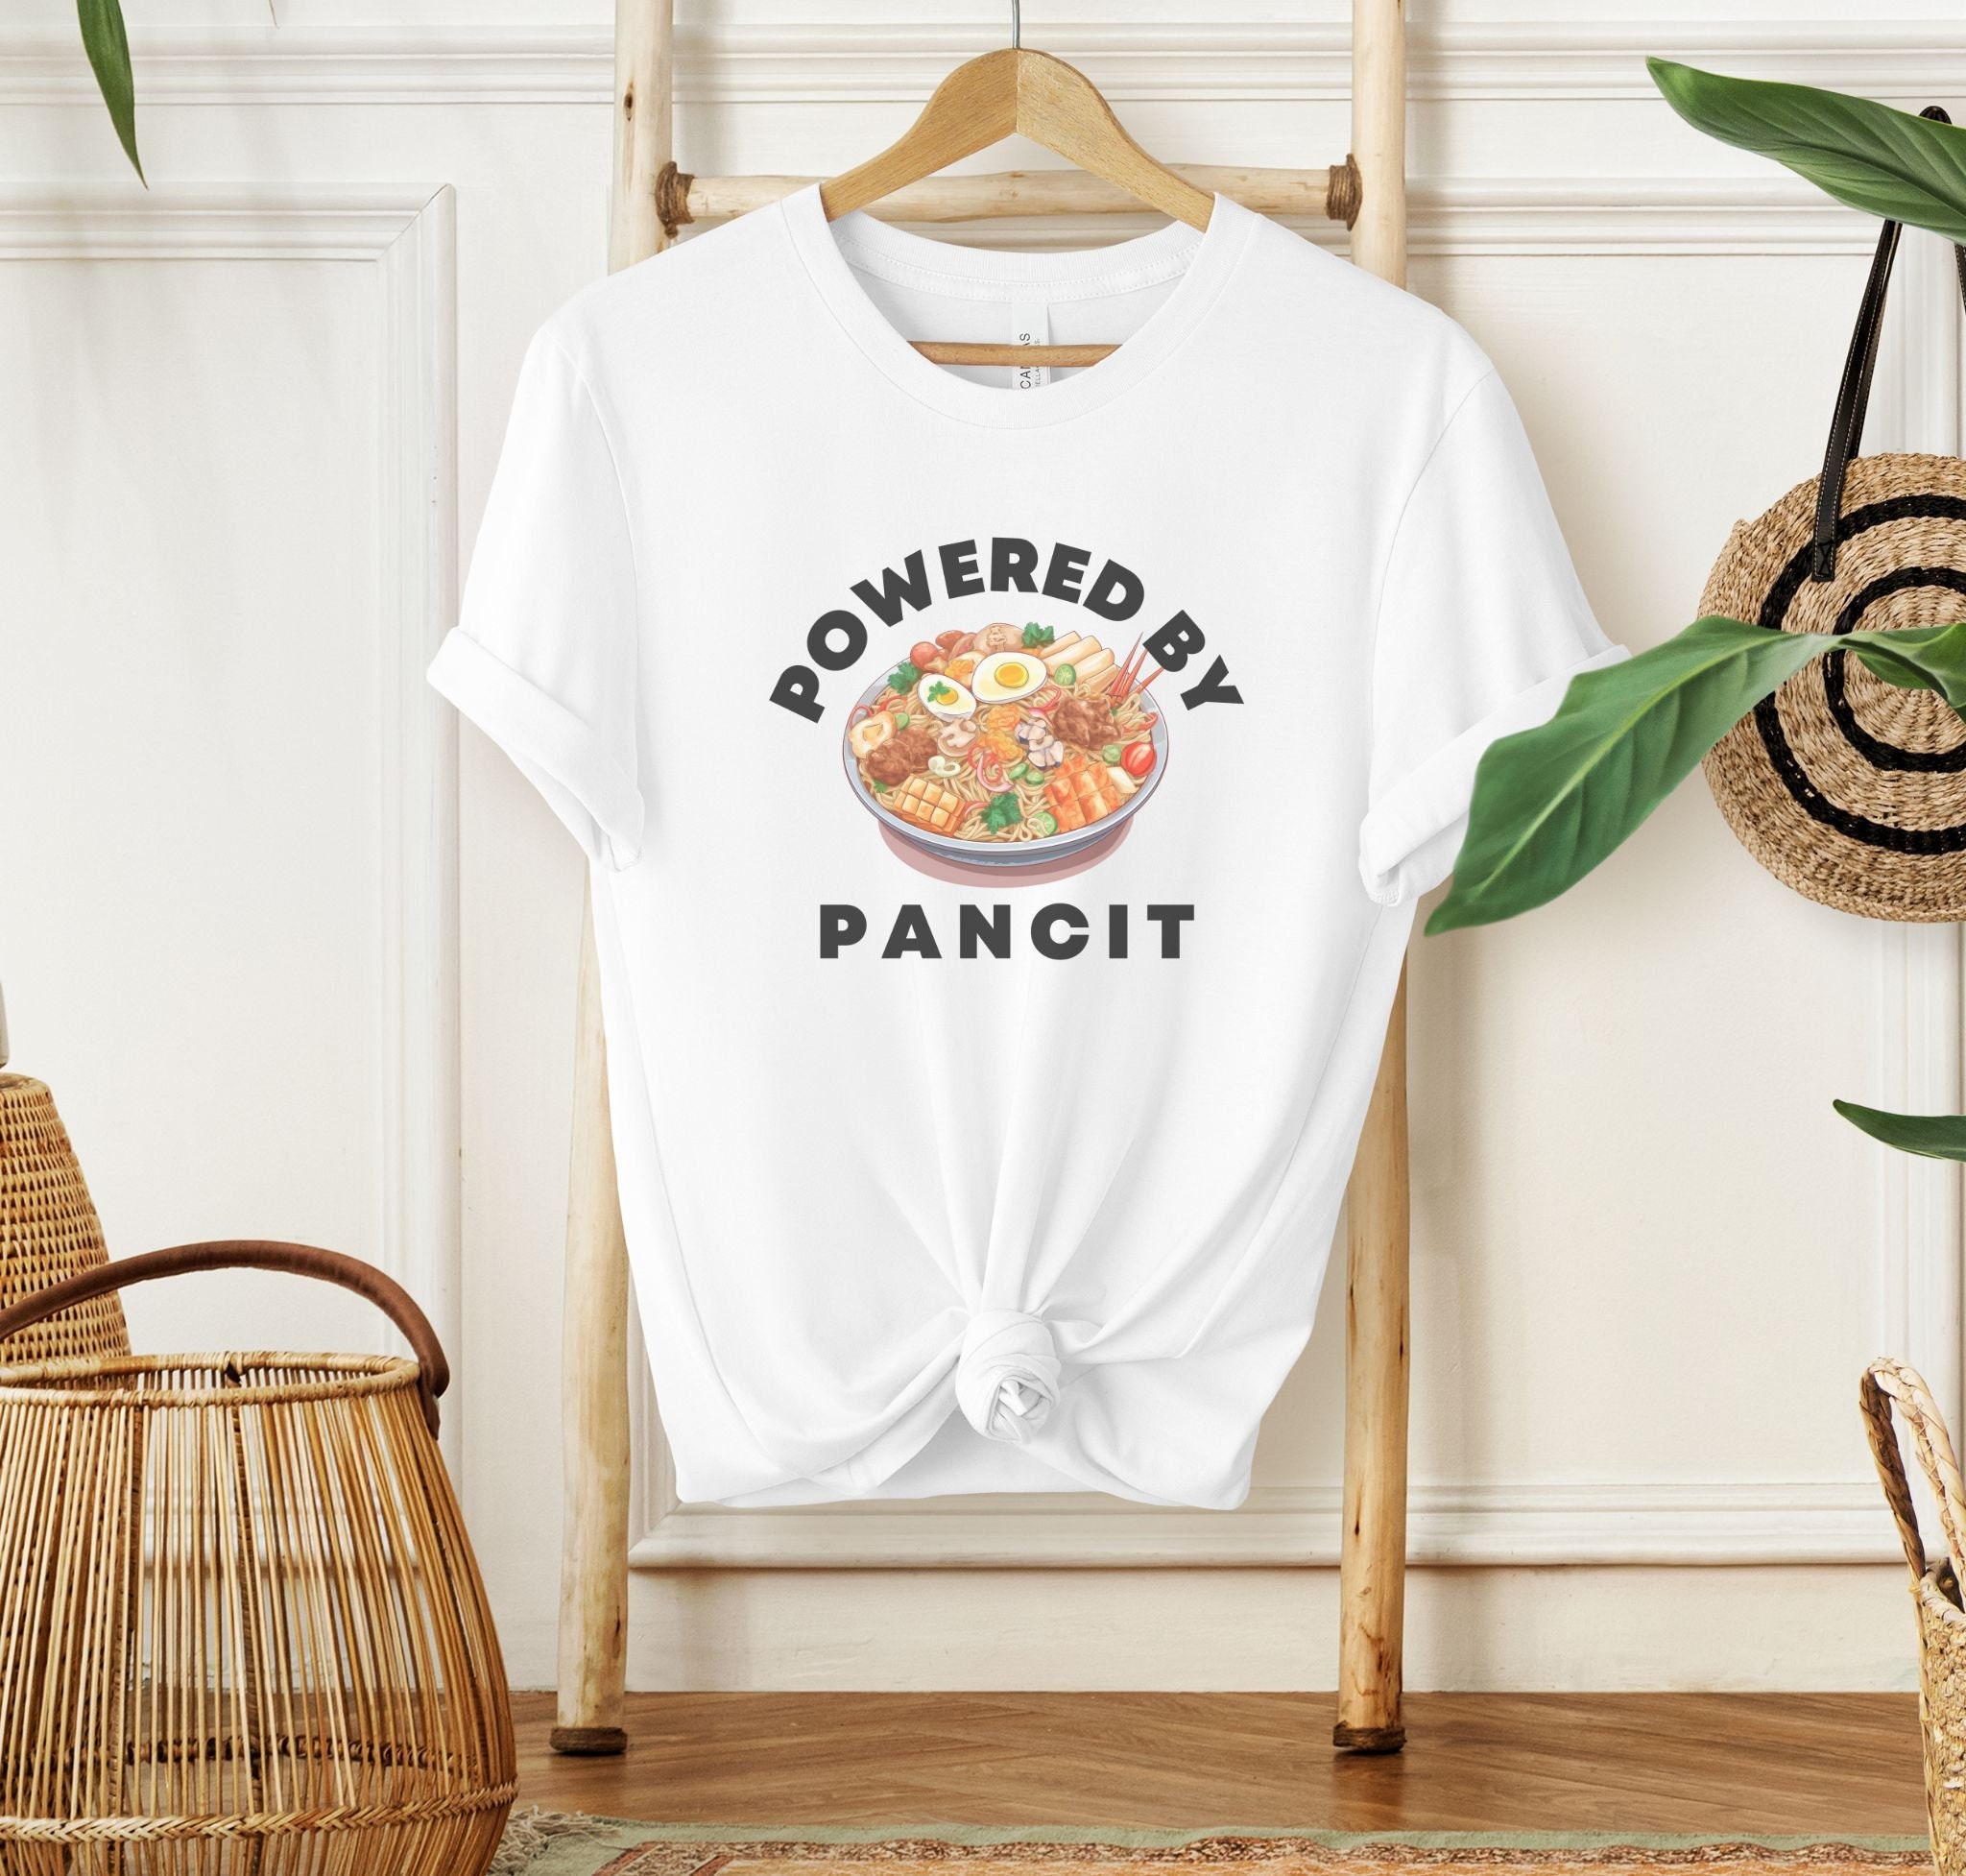 Pancit T-Shirts for Sale